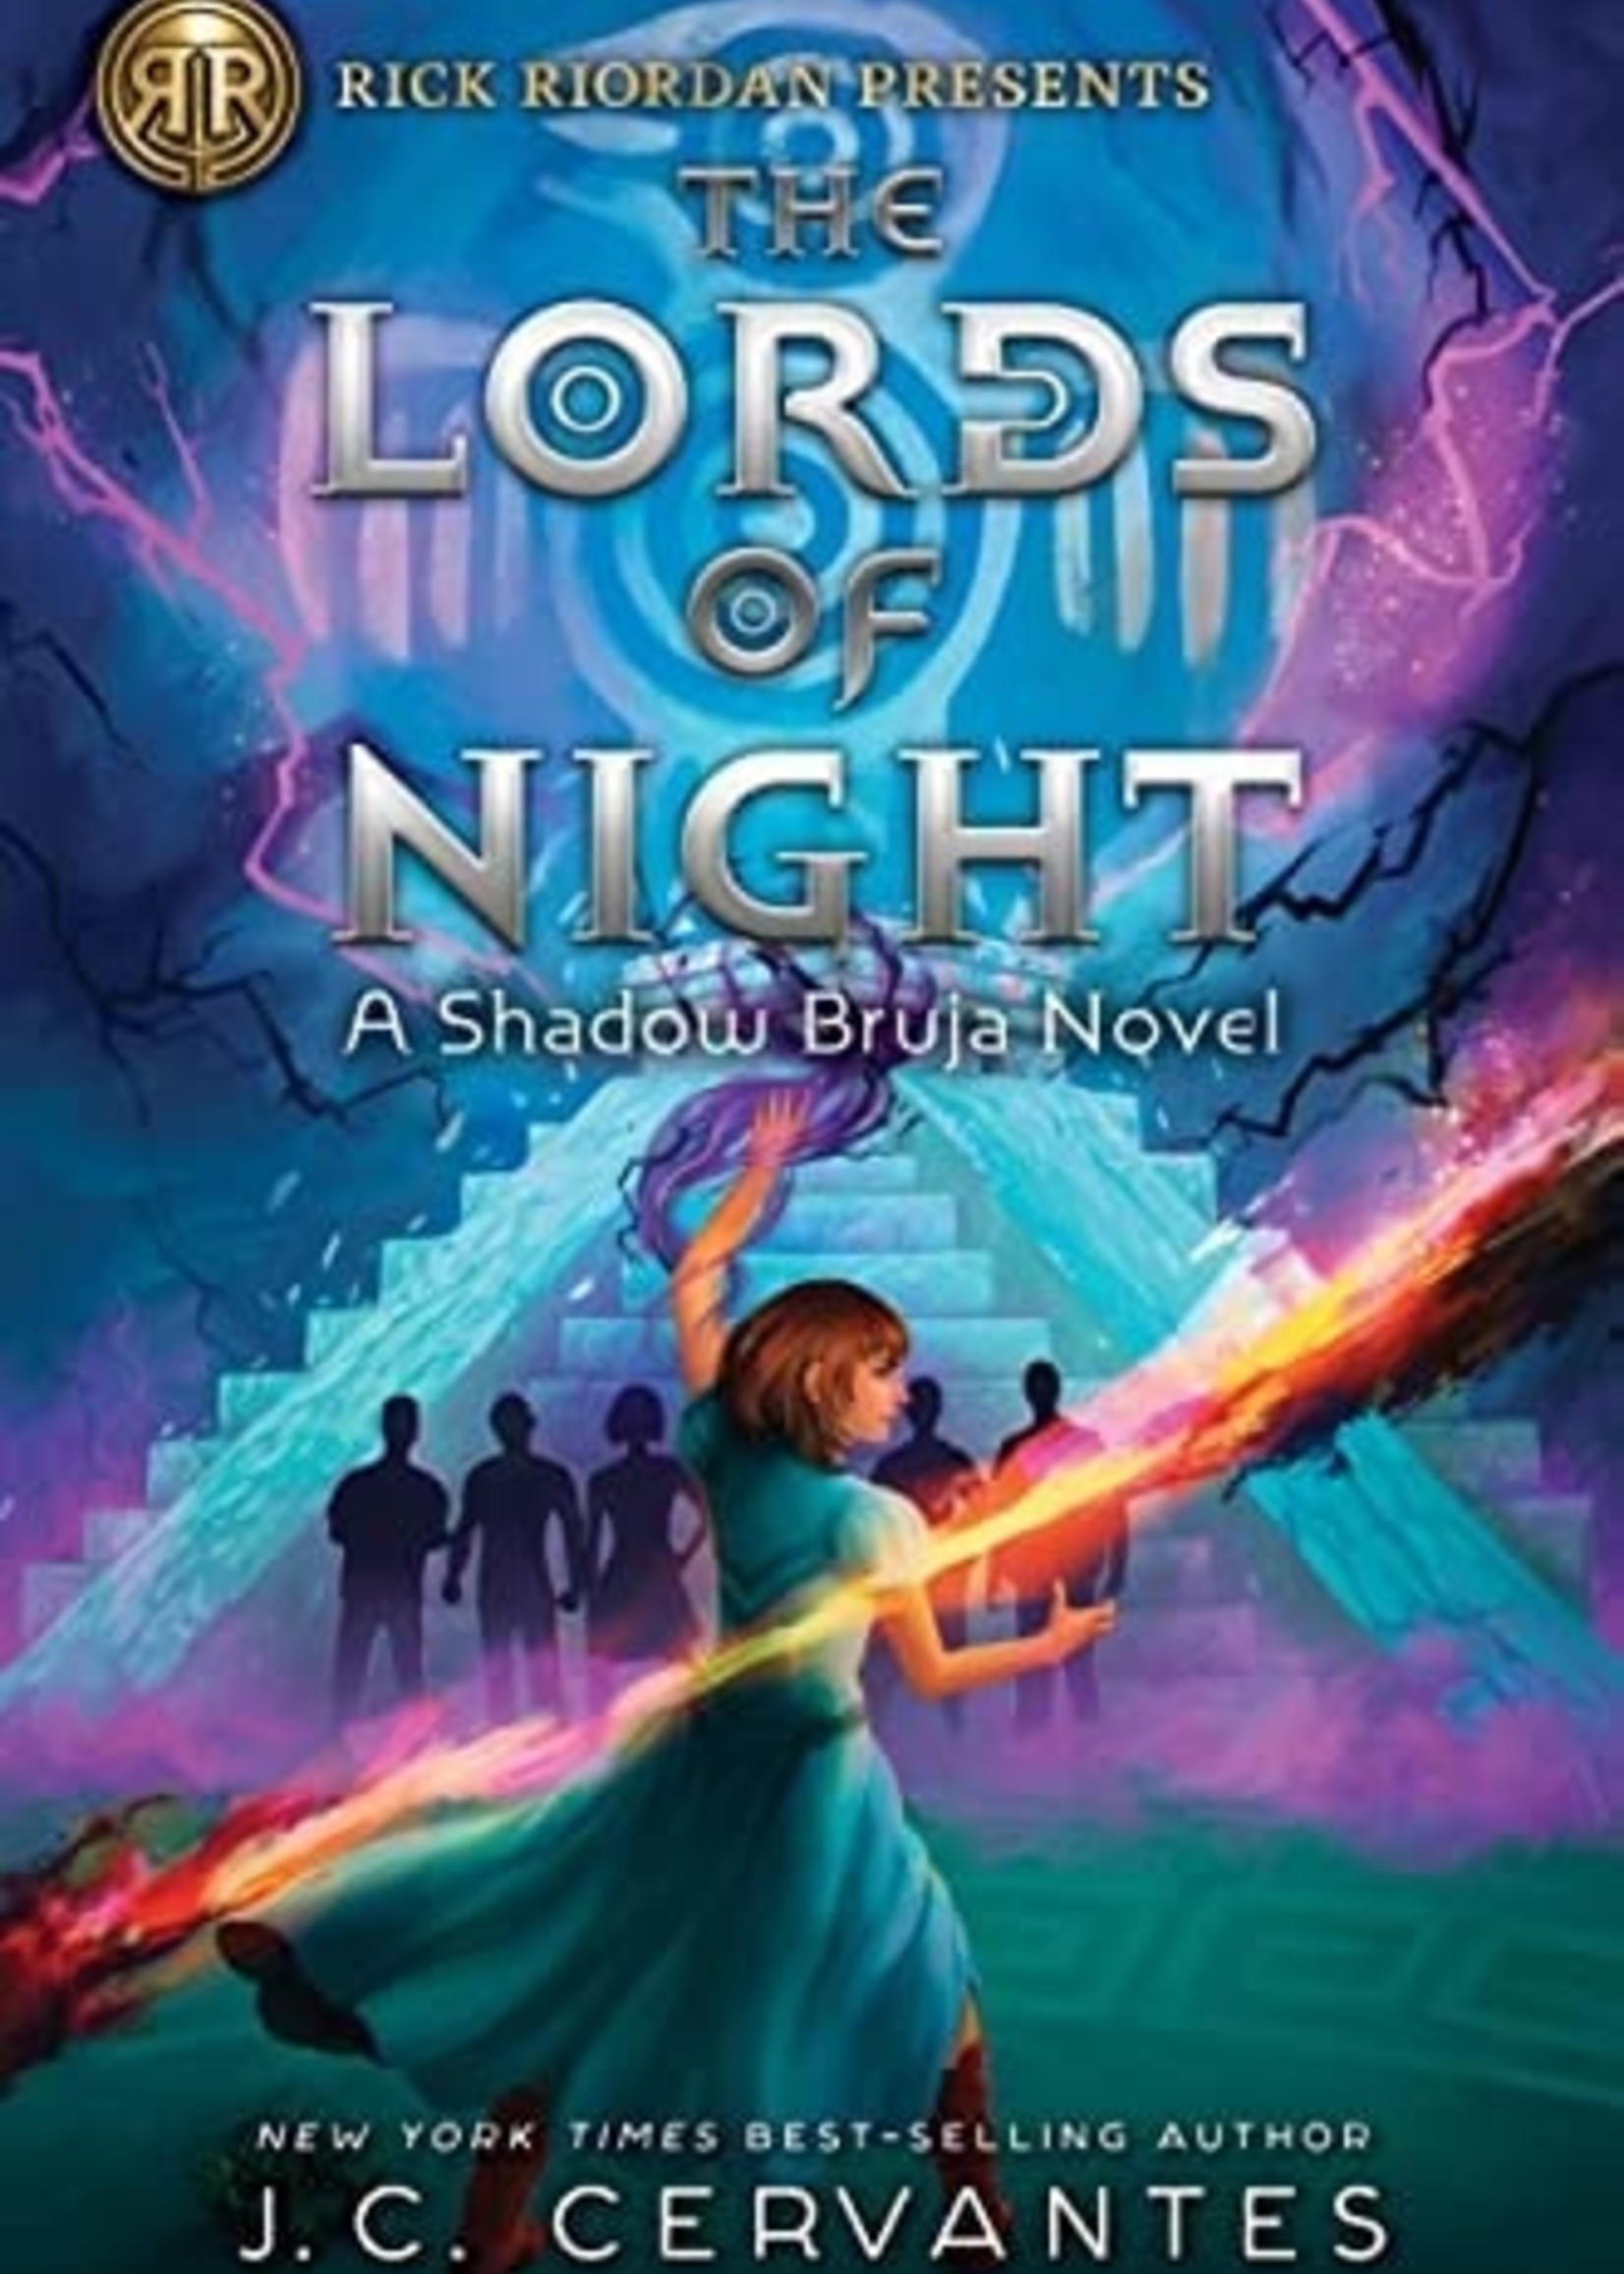 Rick Riordan Presents: Shadow Bruja #01, The Lords of Night - Hardcover